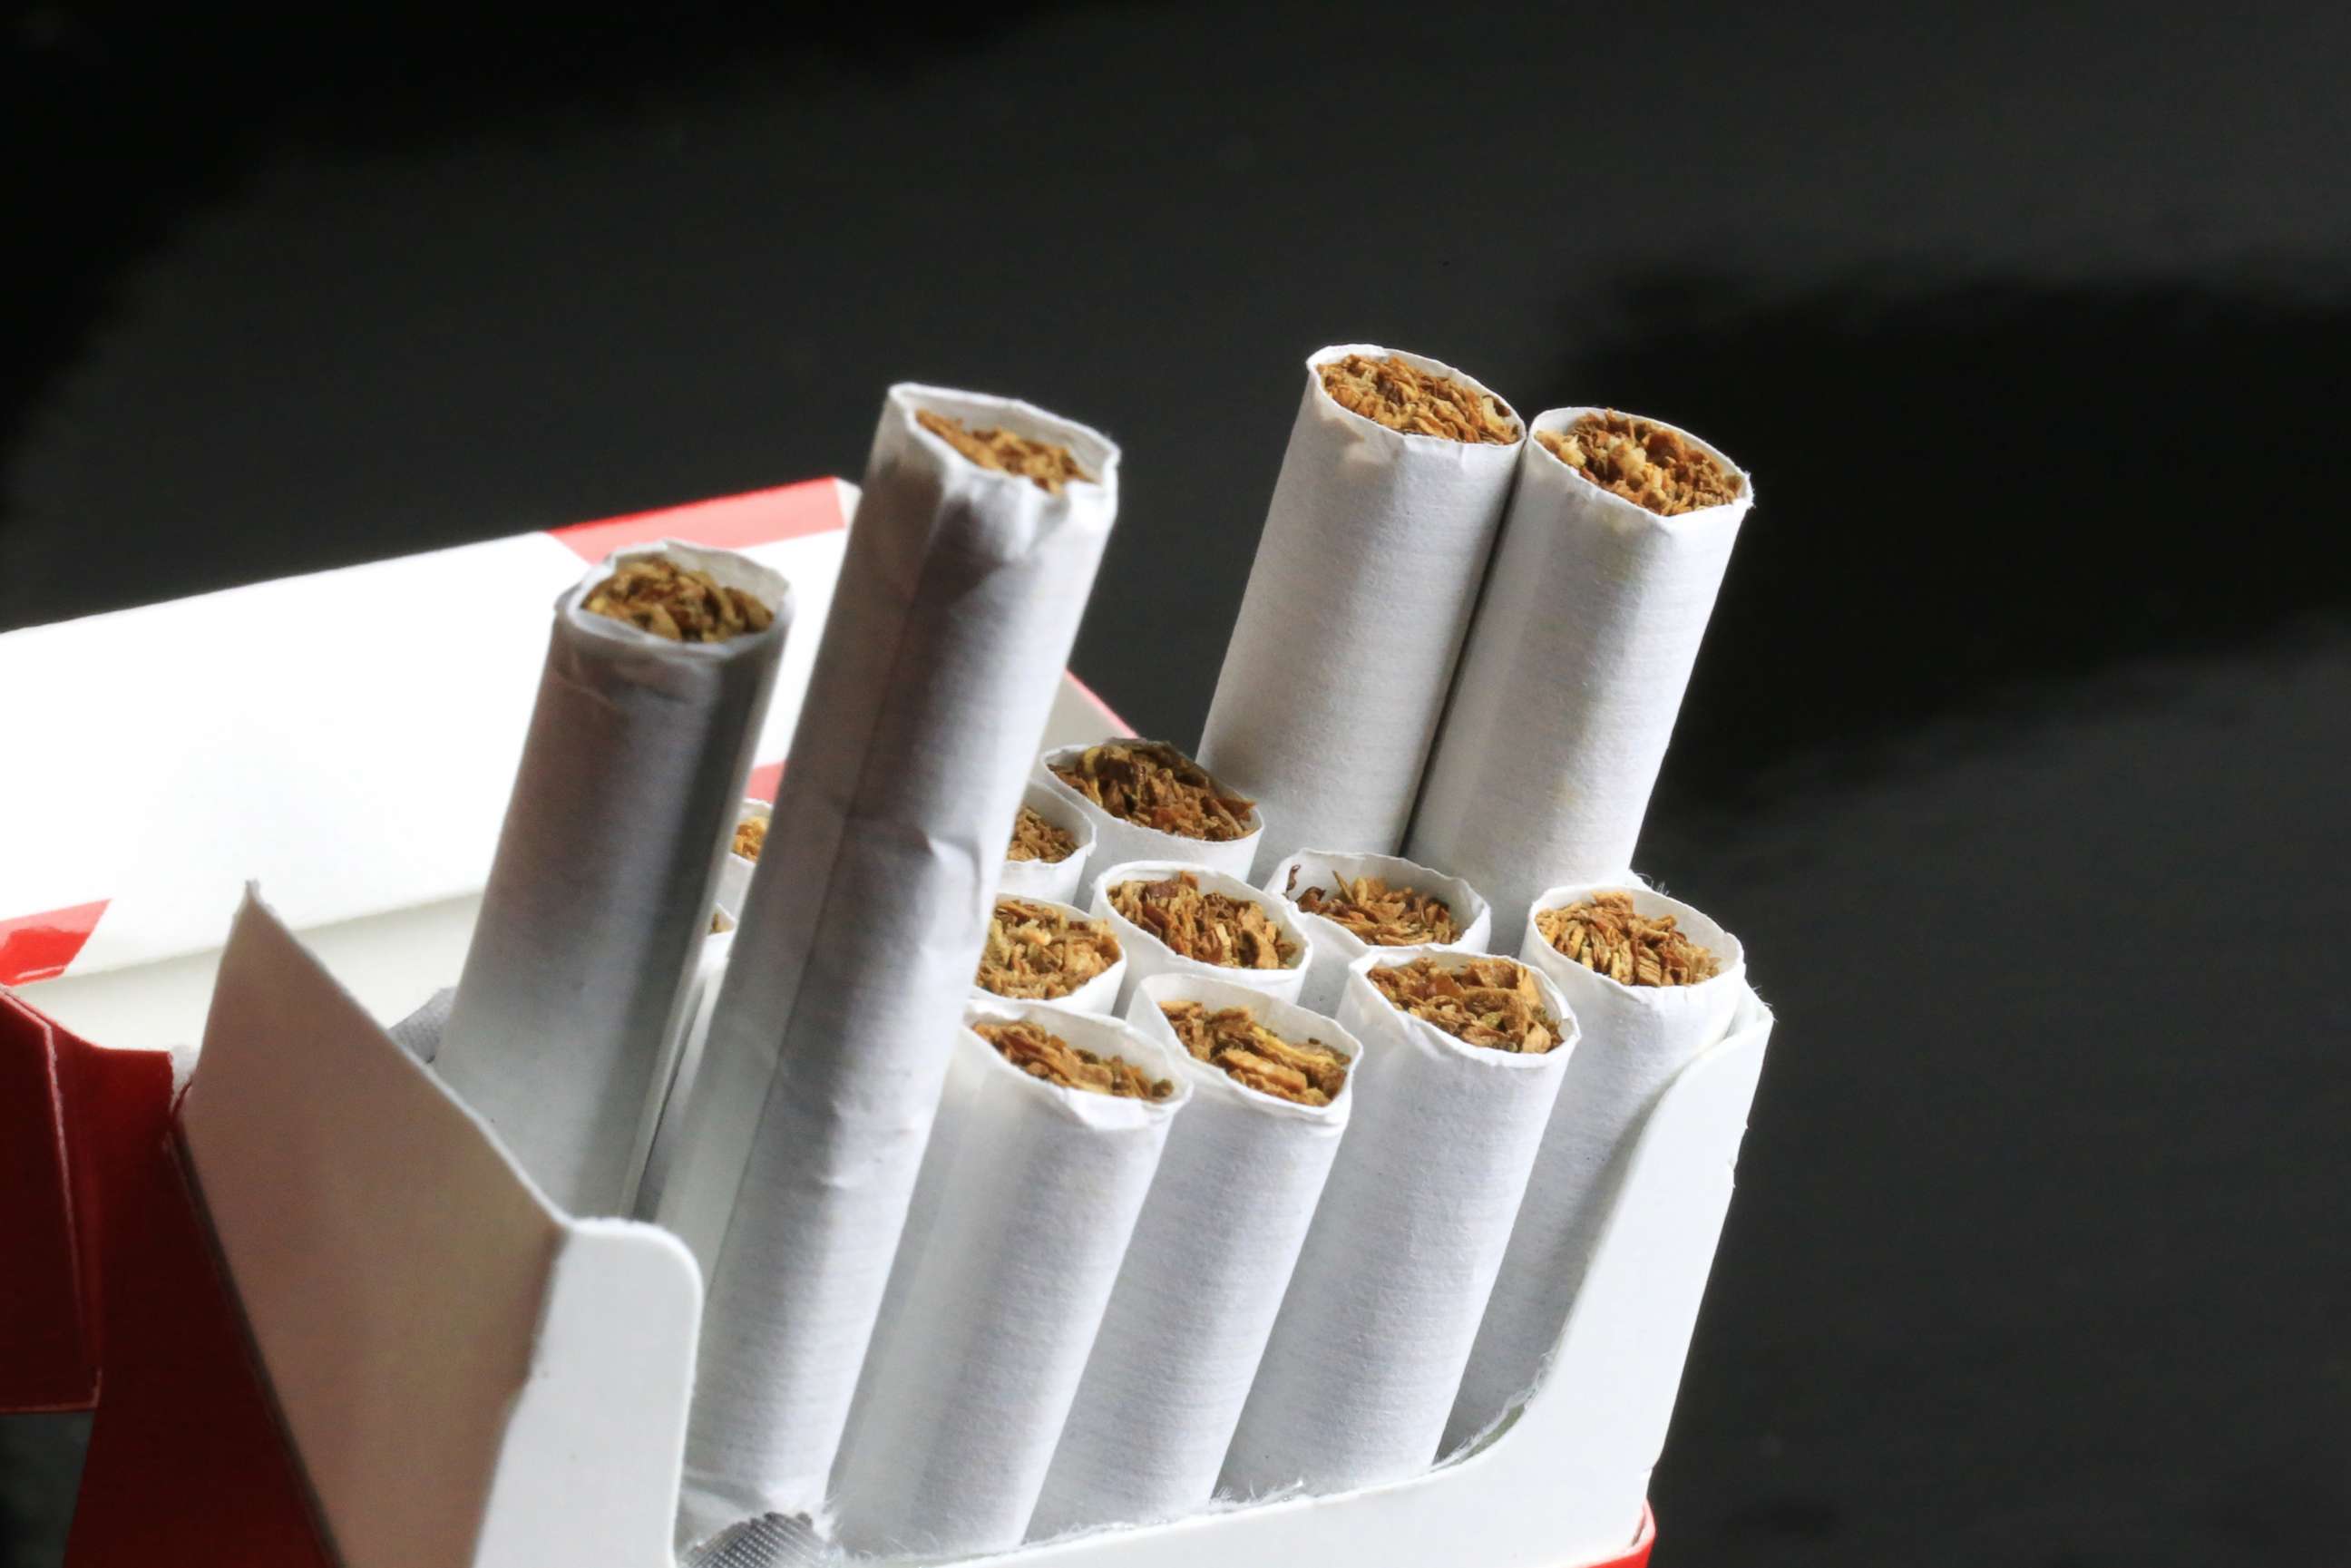 PHOTO: Cigarettes are pictured in a stock photo. 